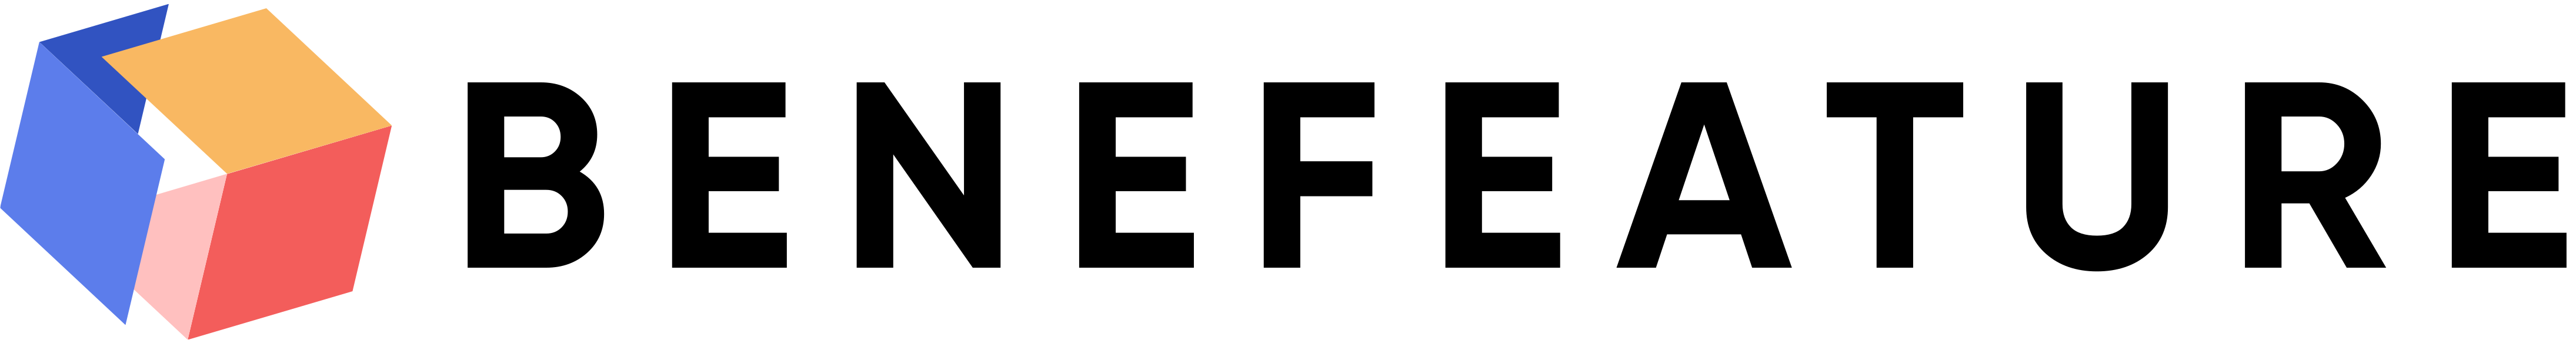 benefeature-black-logo